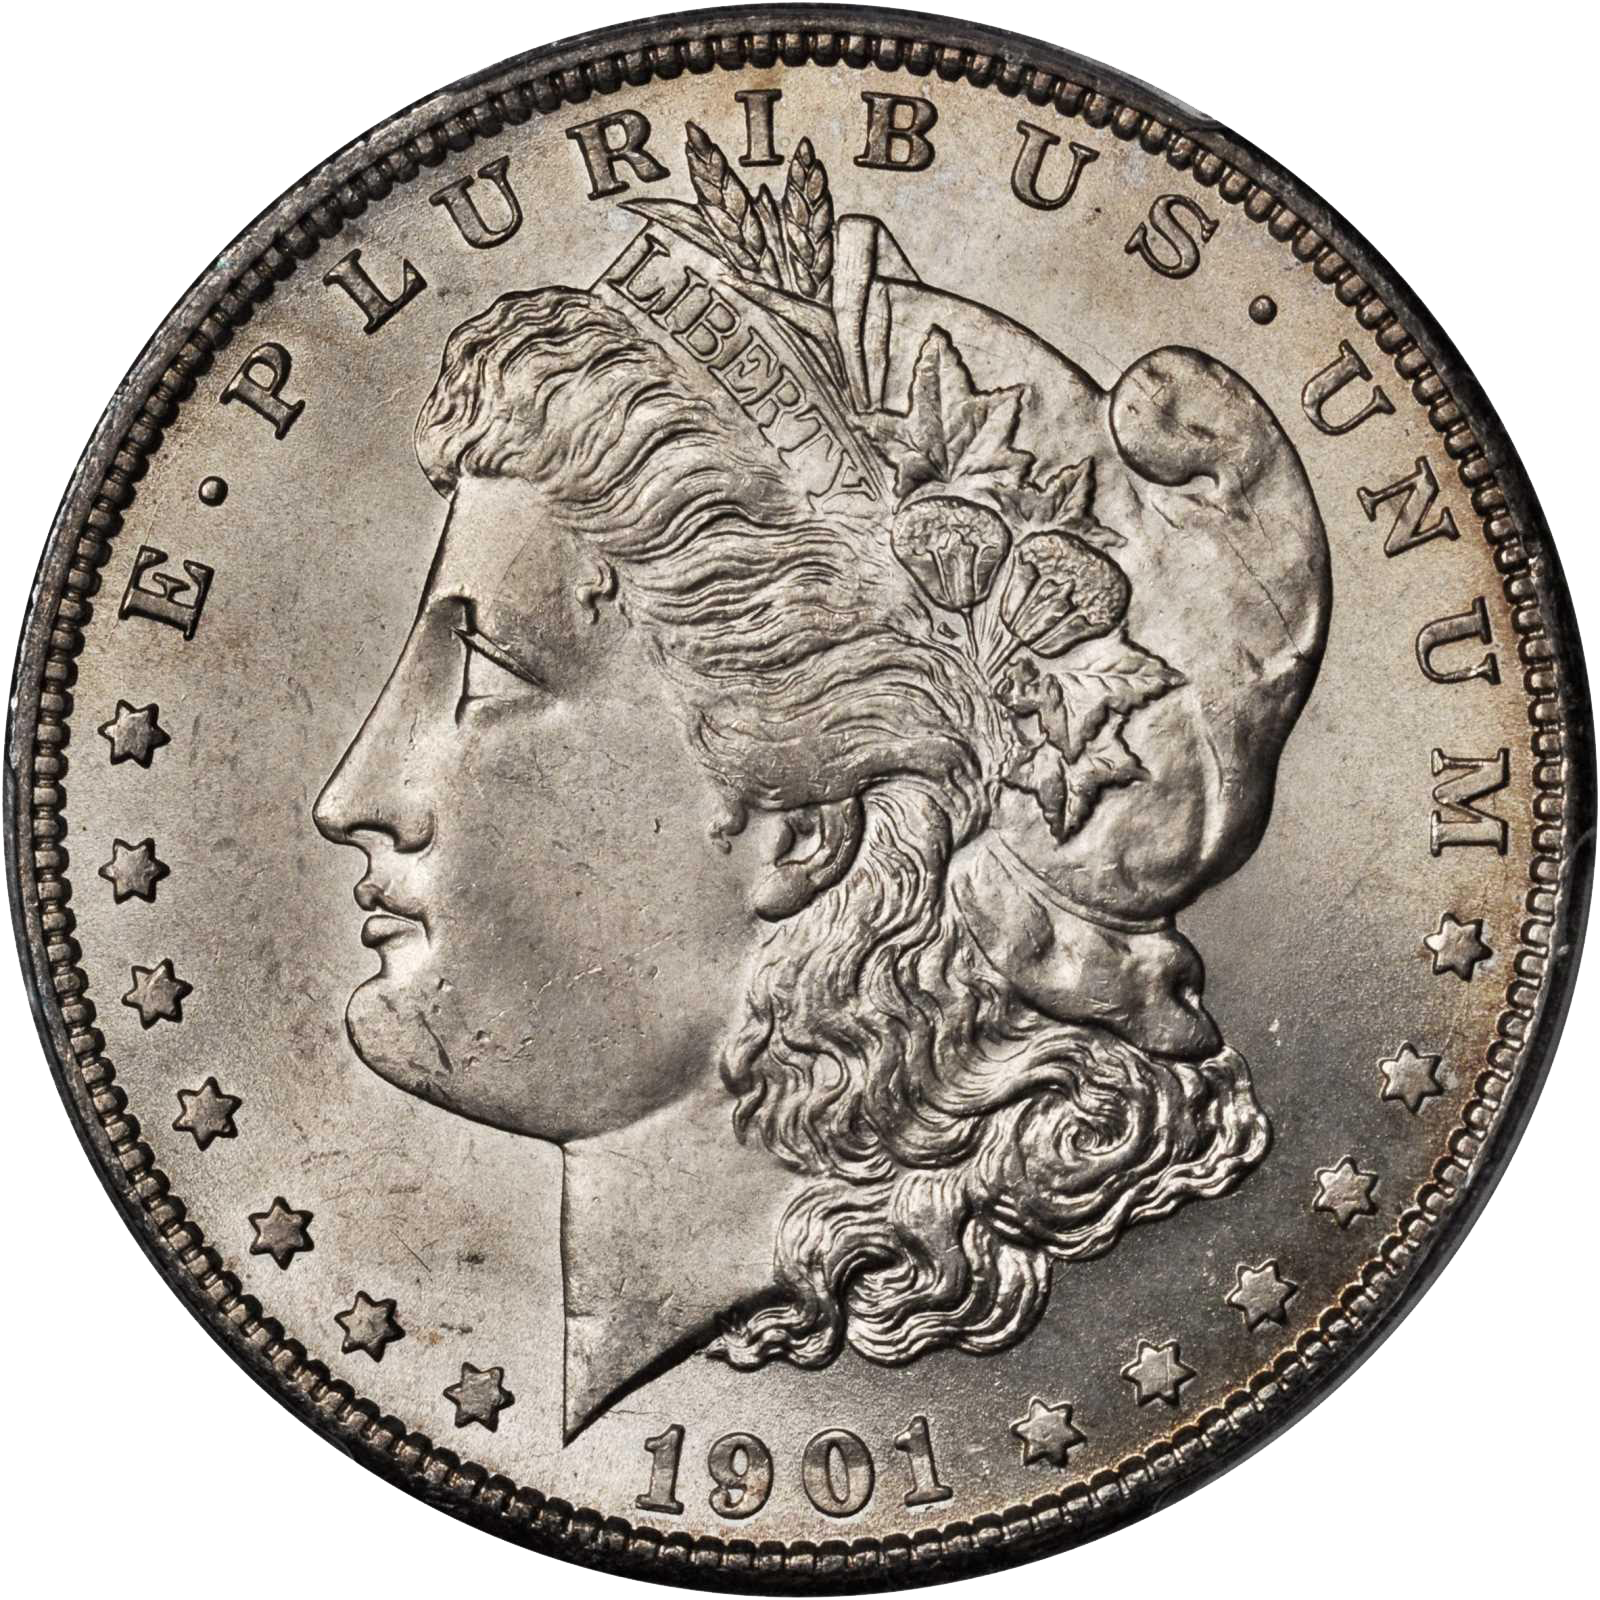 silver coins value